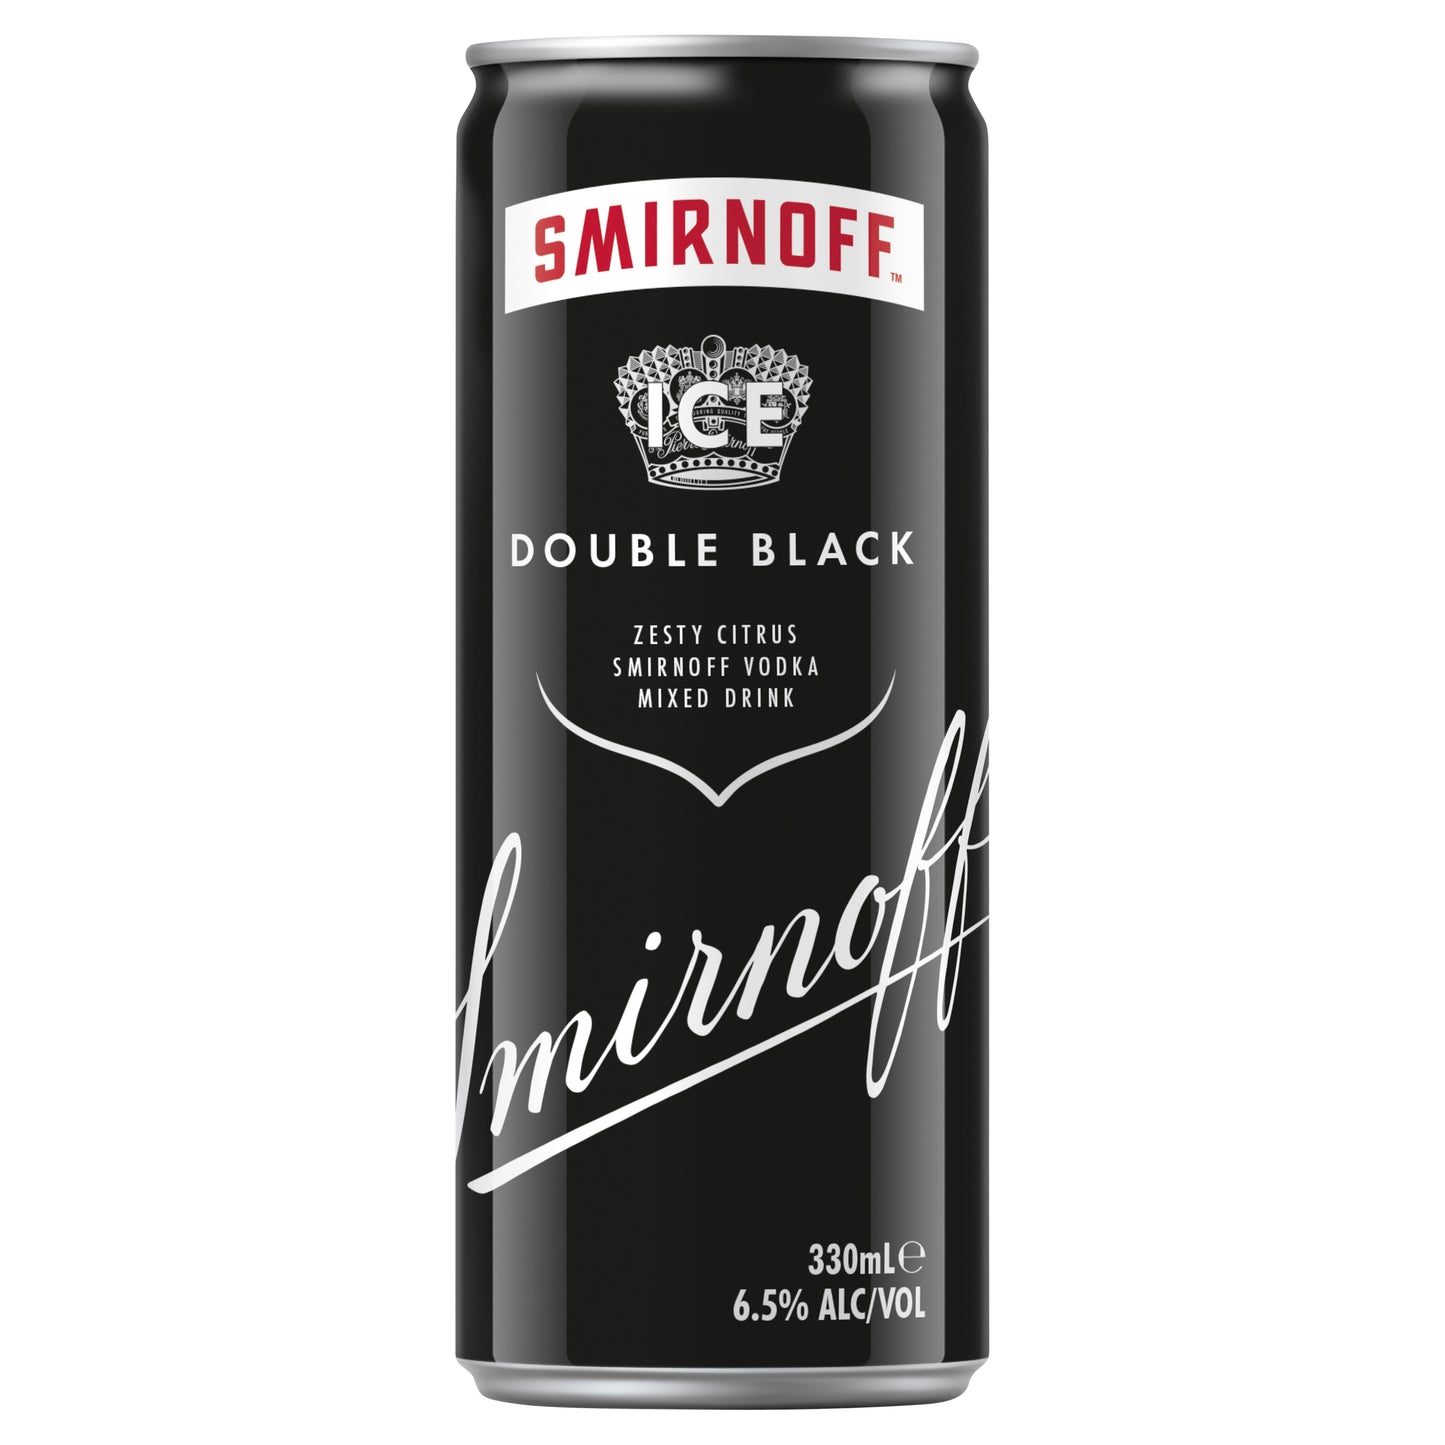 Smirnoff Ice Double Black Vodka 6.5% Cans 330ml - Boozeit.com.au